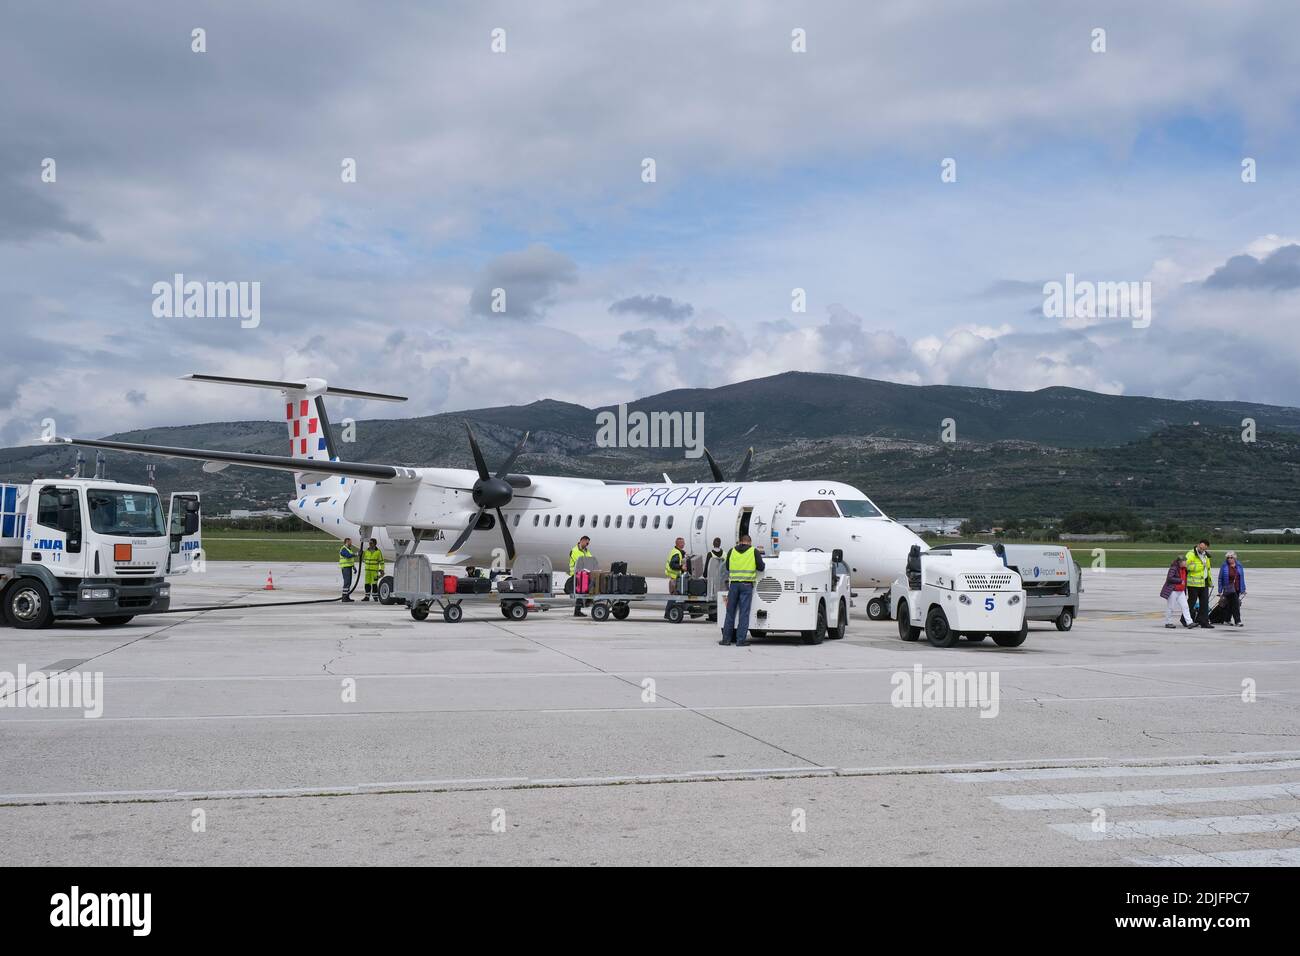 Croatia Airlines Bombardier Q400 parked on a runway  during disembarkation at Split airport, Dalmatia, Croatia, Europe. Stock Photo